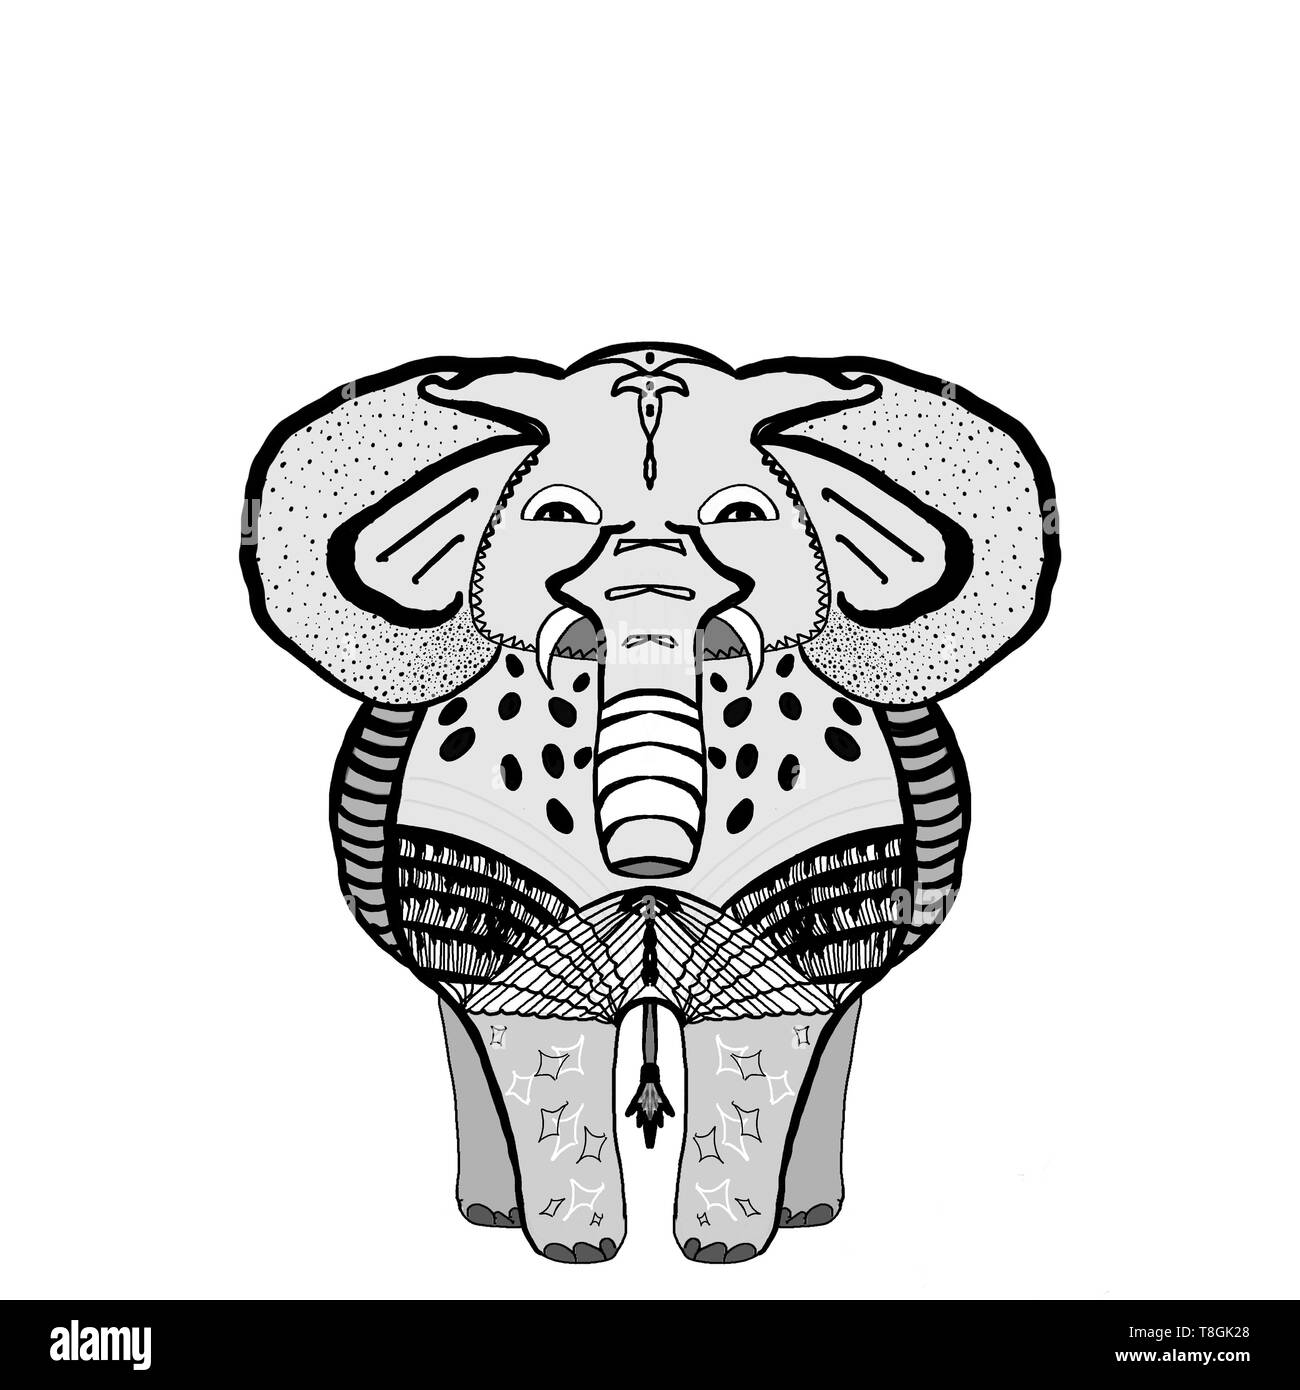 Decorative Elephant Illustration. Indian style elephant front view with stylized ornament . Stock Photo